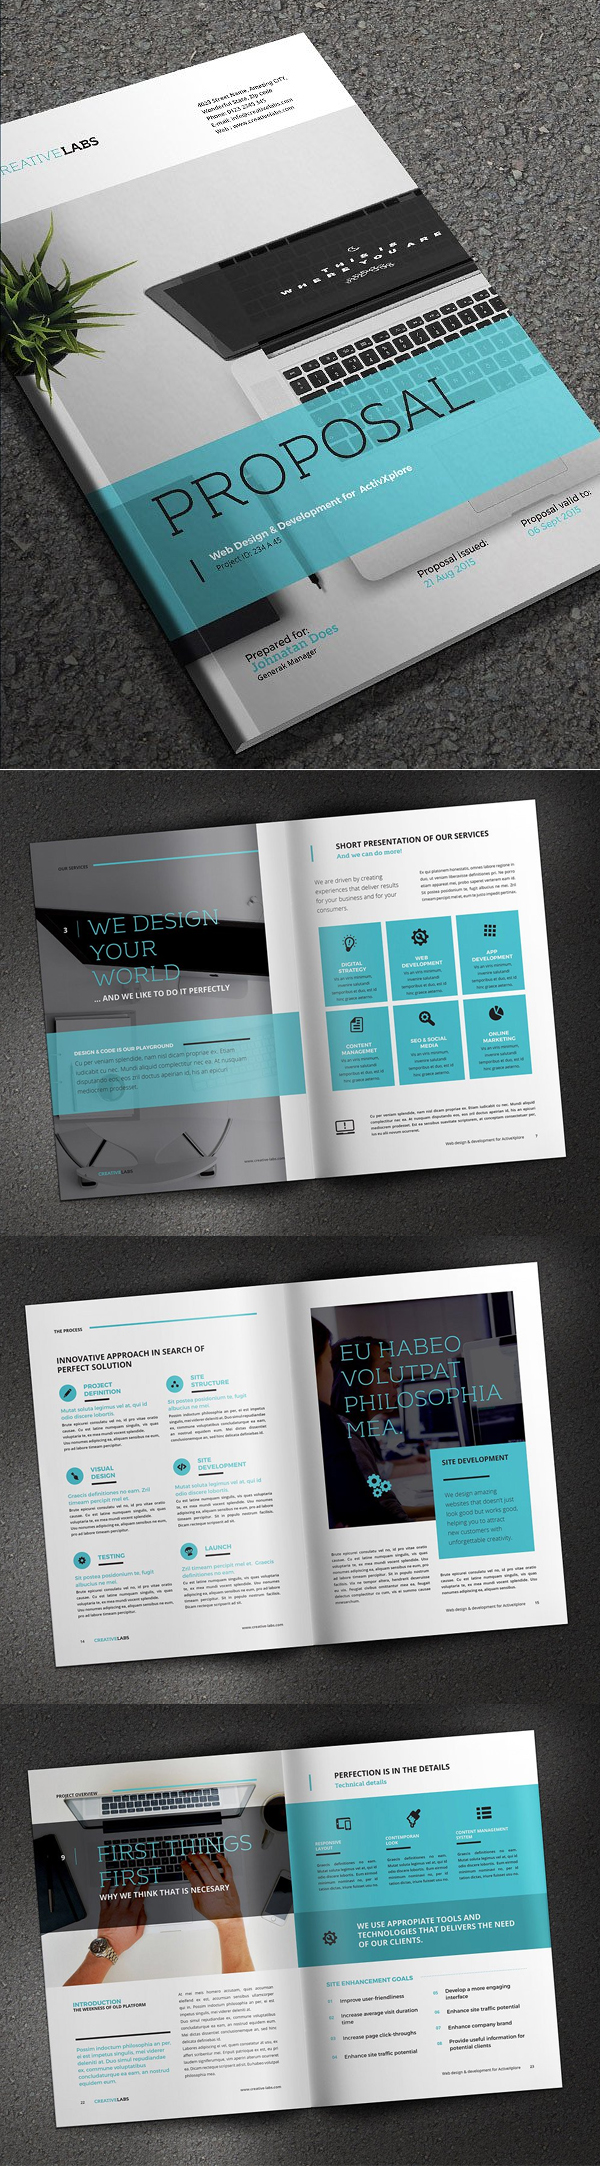 100 Professional Corporate Brochure Templates - 84